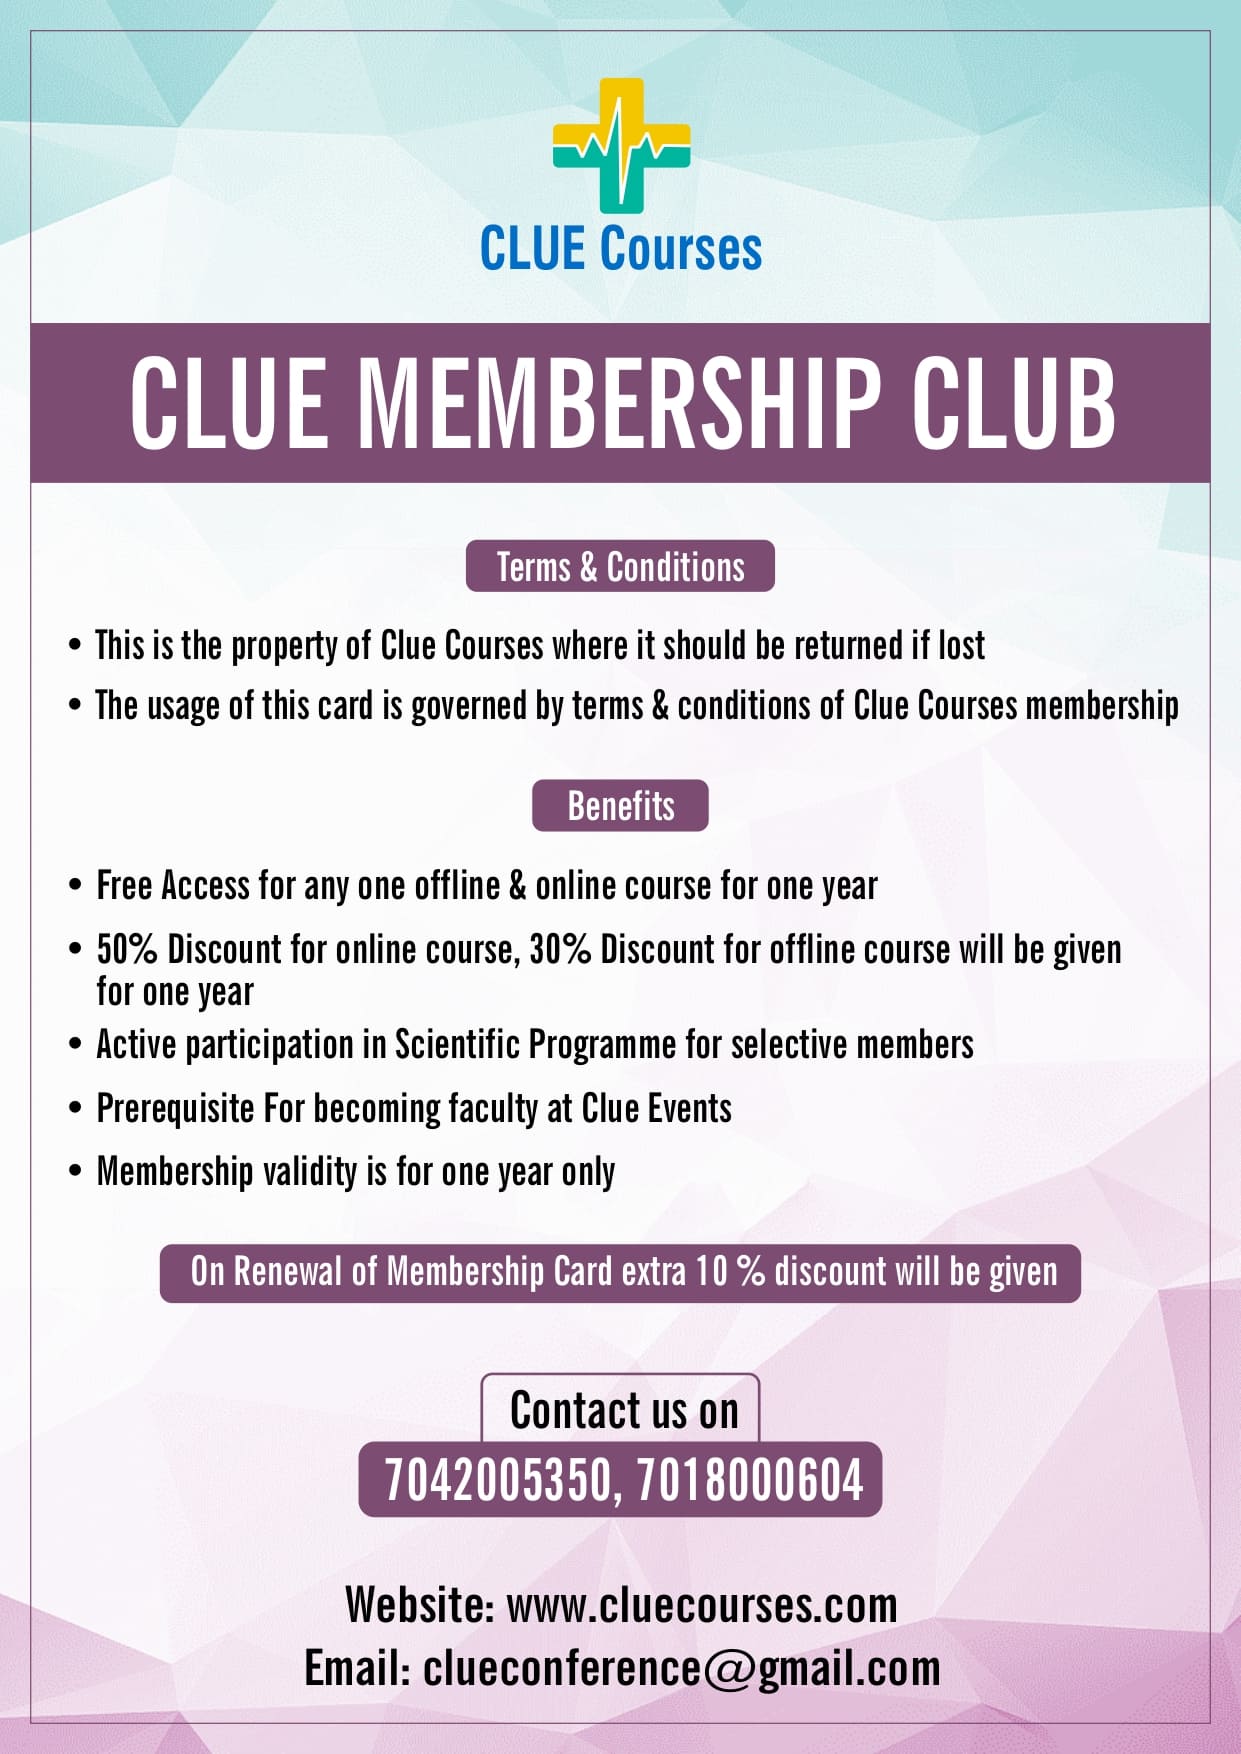 CLUE Membership Club